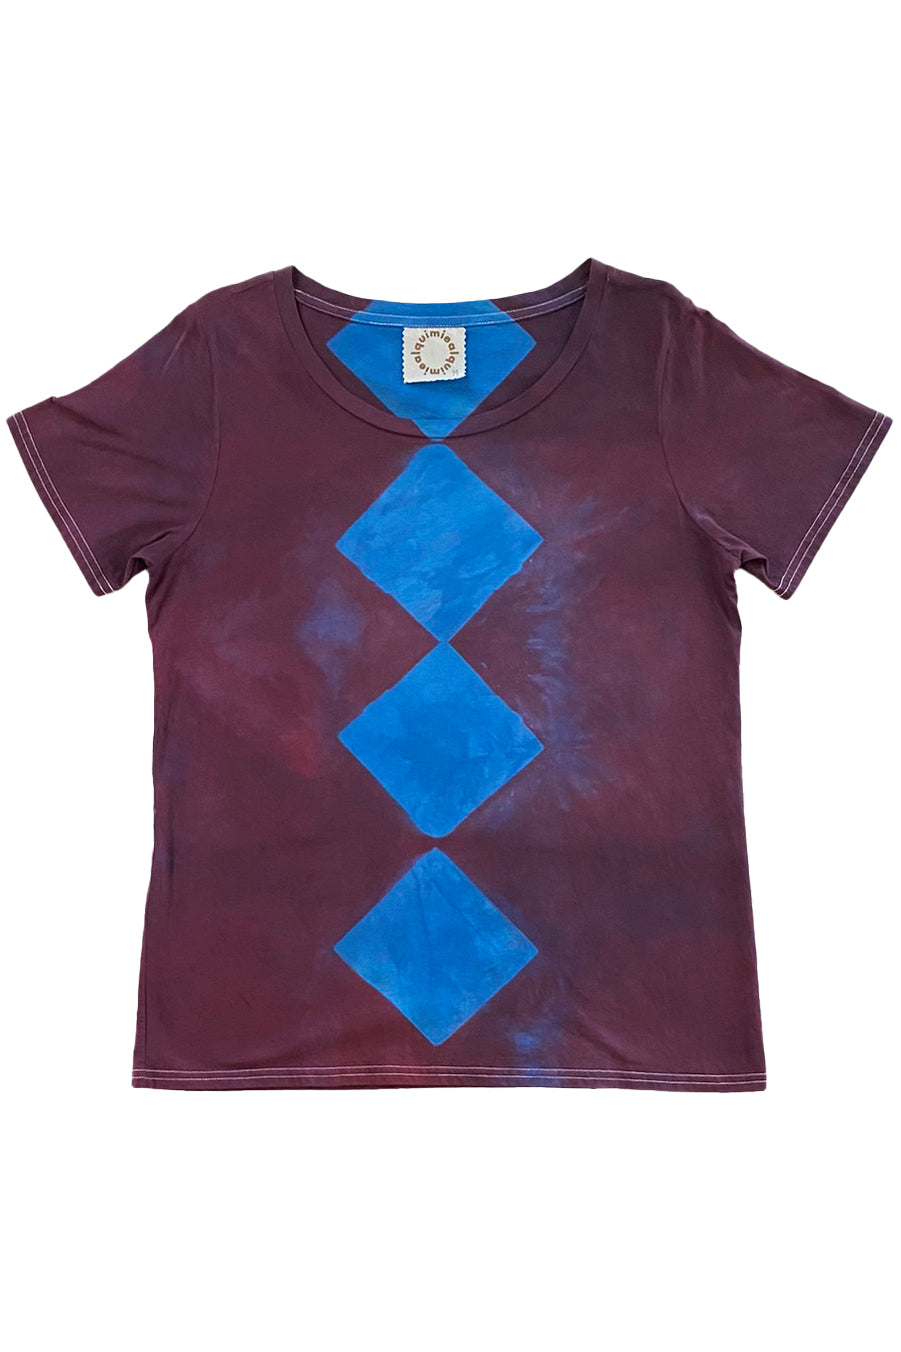 KB x Alquimie Studio Dyed T-Shirt - Shibori Square - Maroon & Blue - Women's M